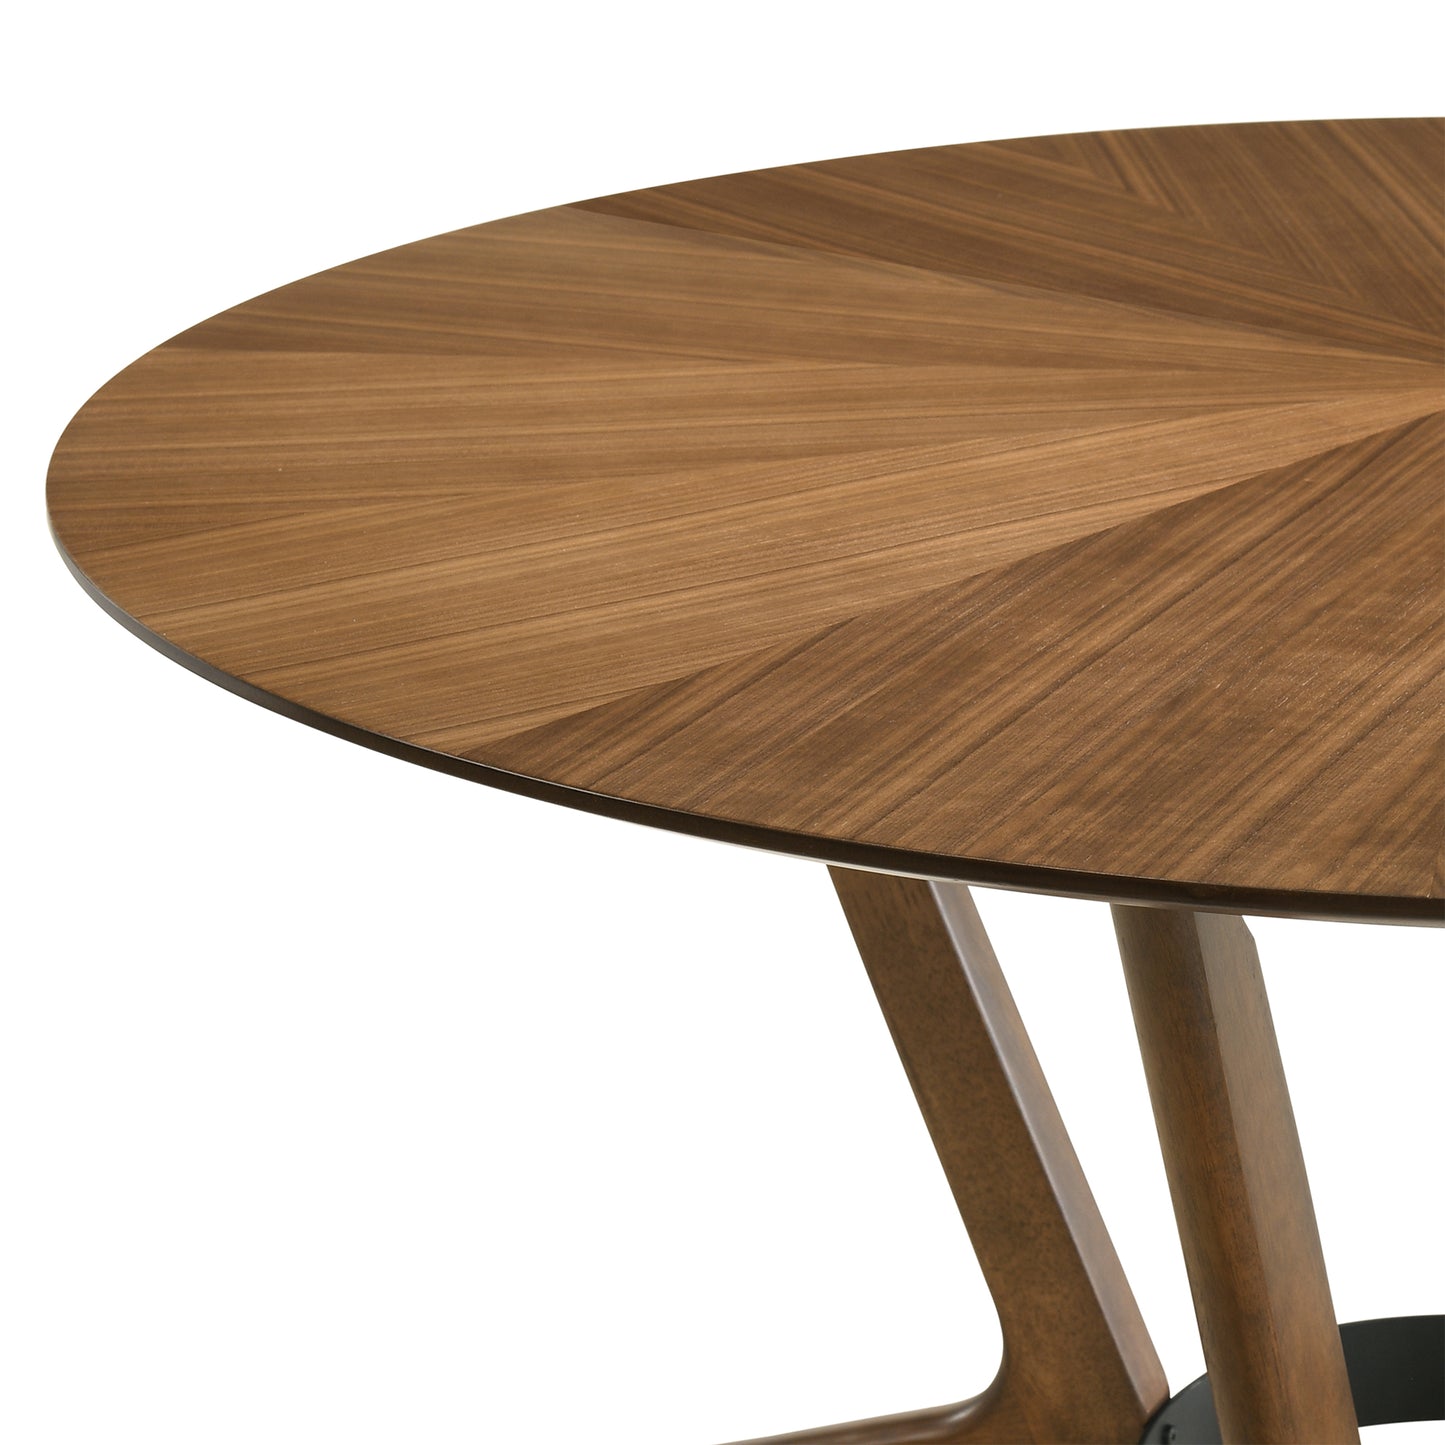 Santana 7 Piece Round Walnut Wood Dining Table Set with Orange Fabric